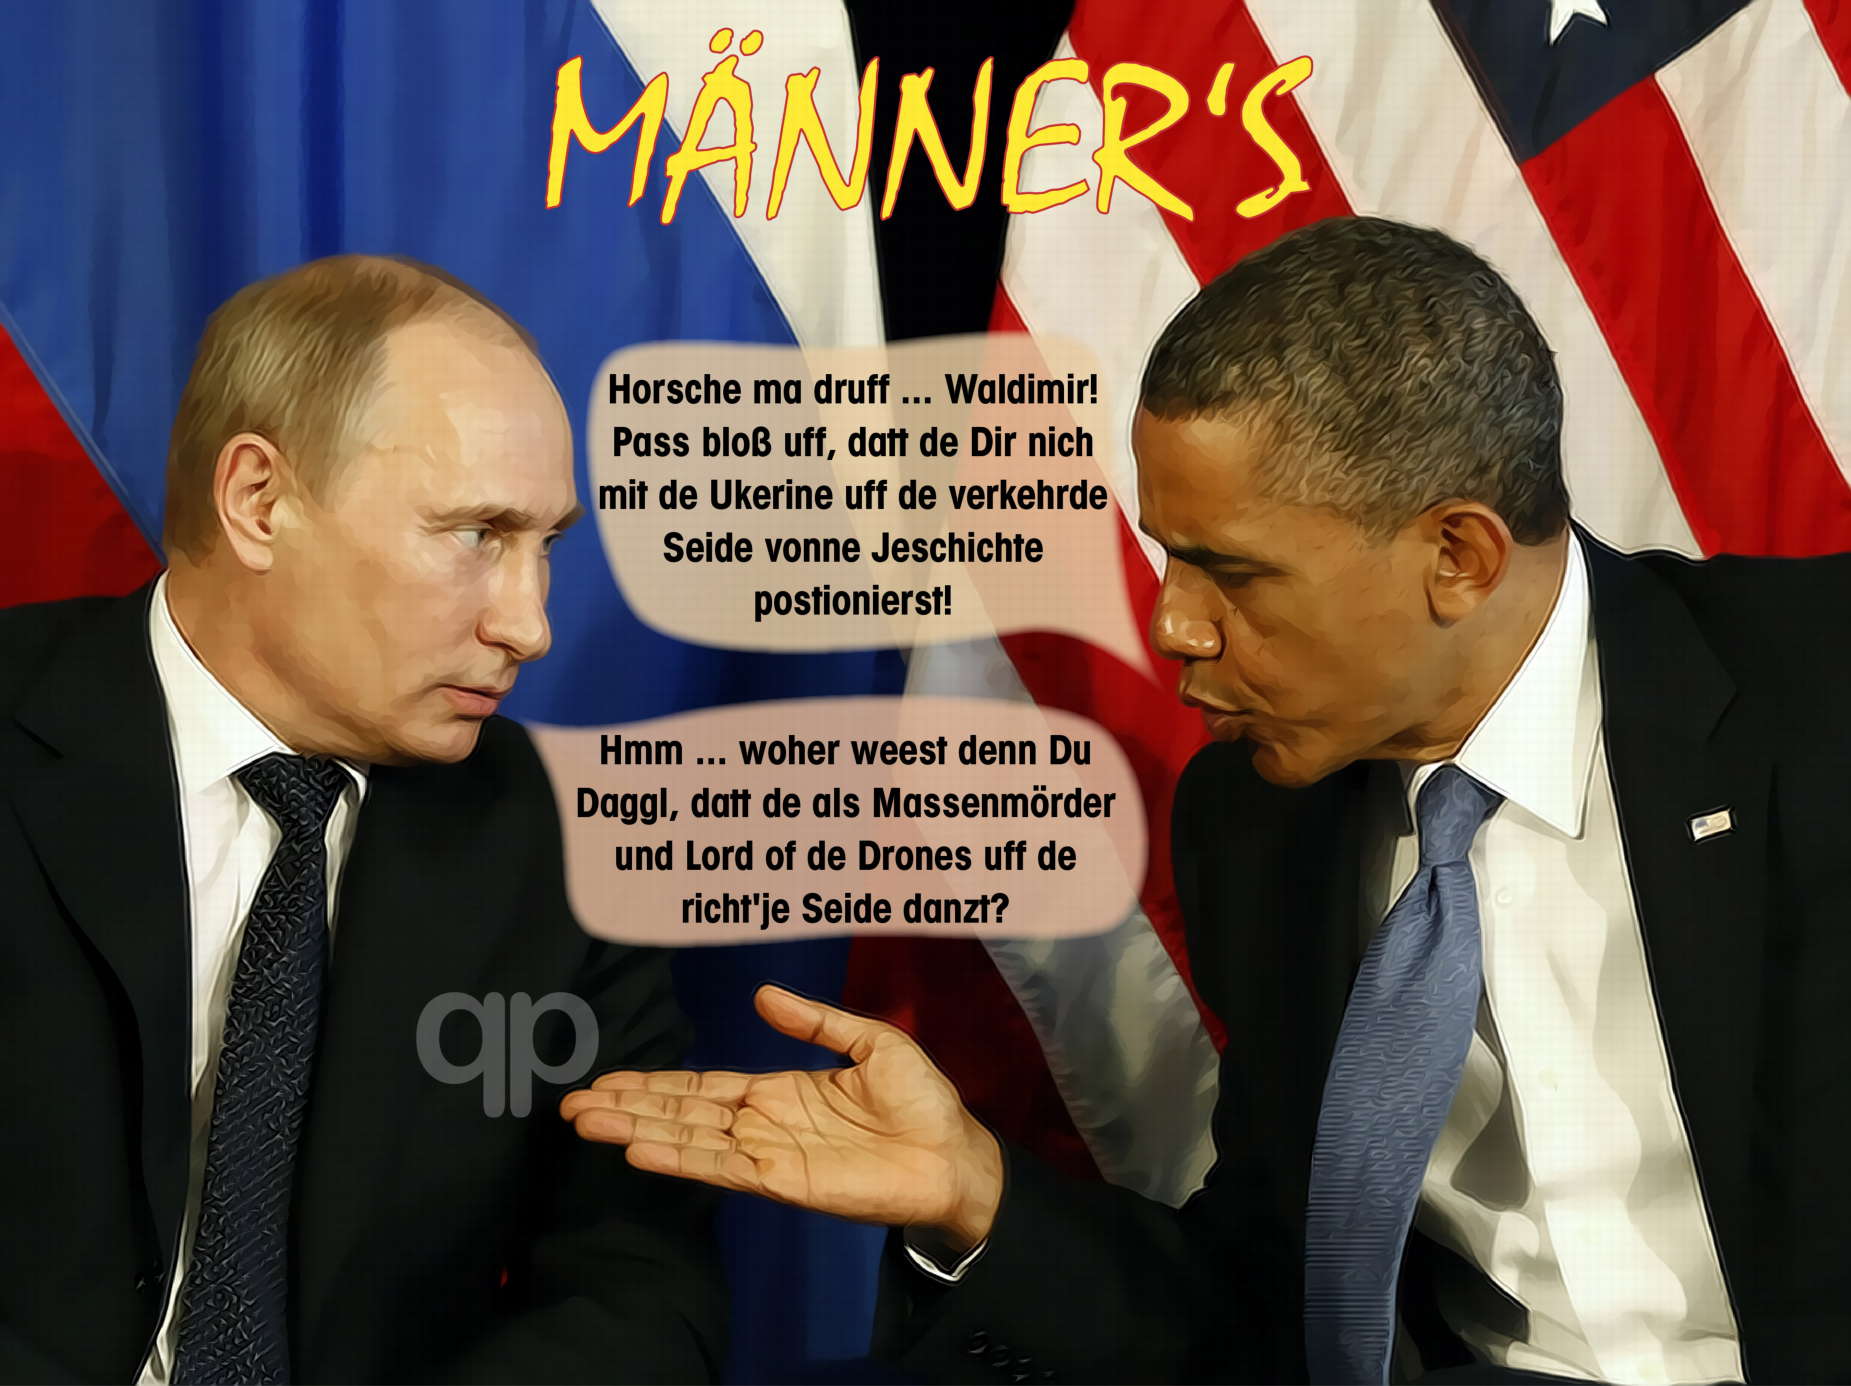 Putin obama mens talk about ukraine and history Kopie